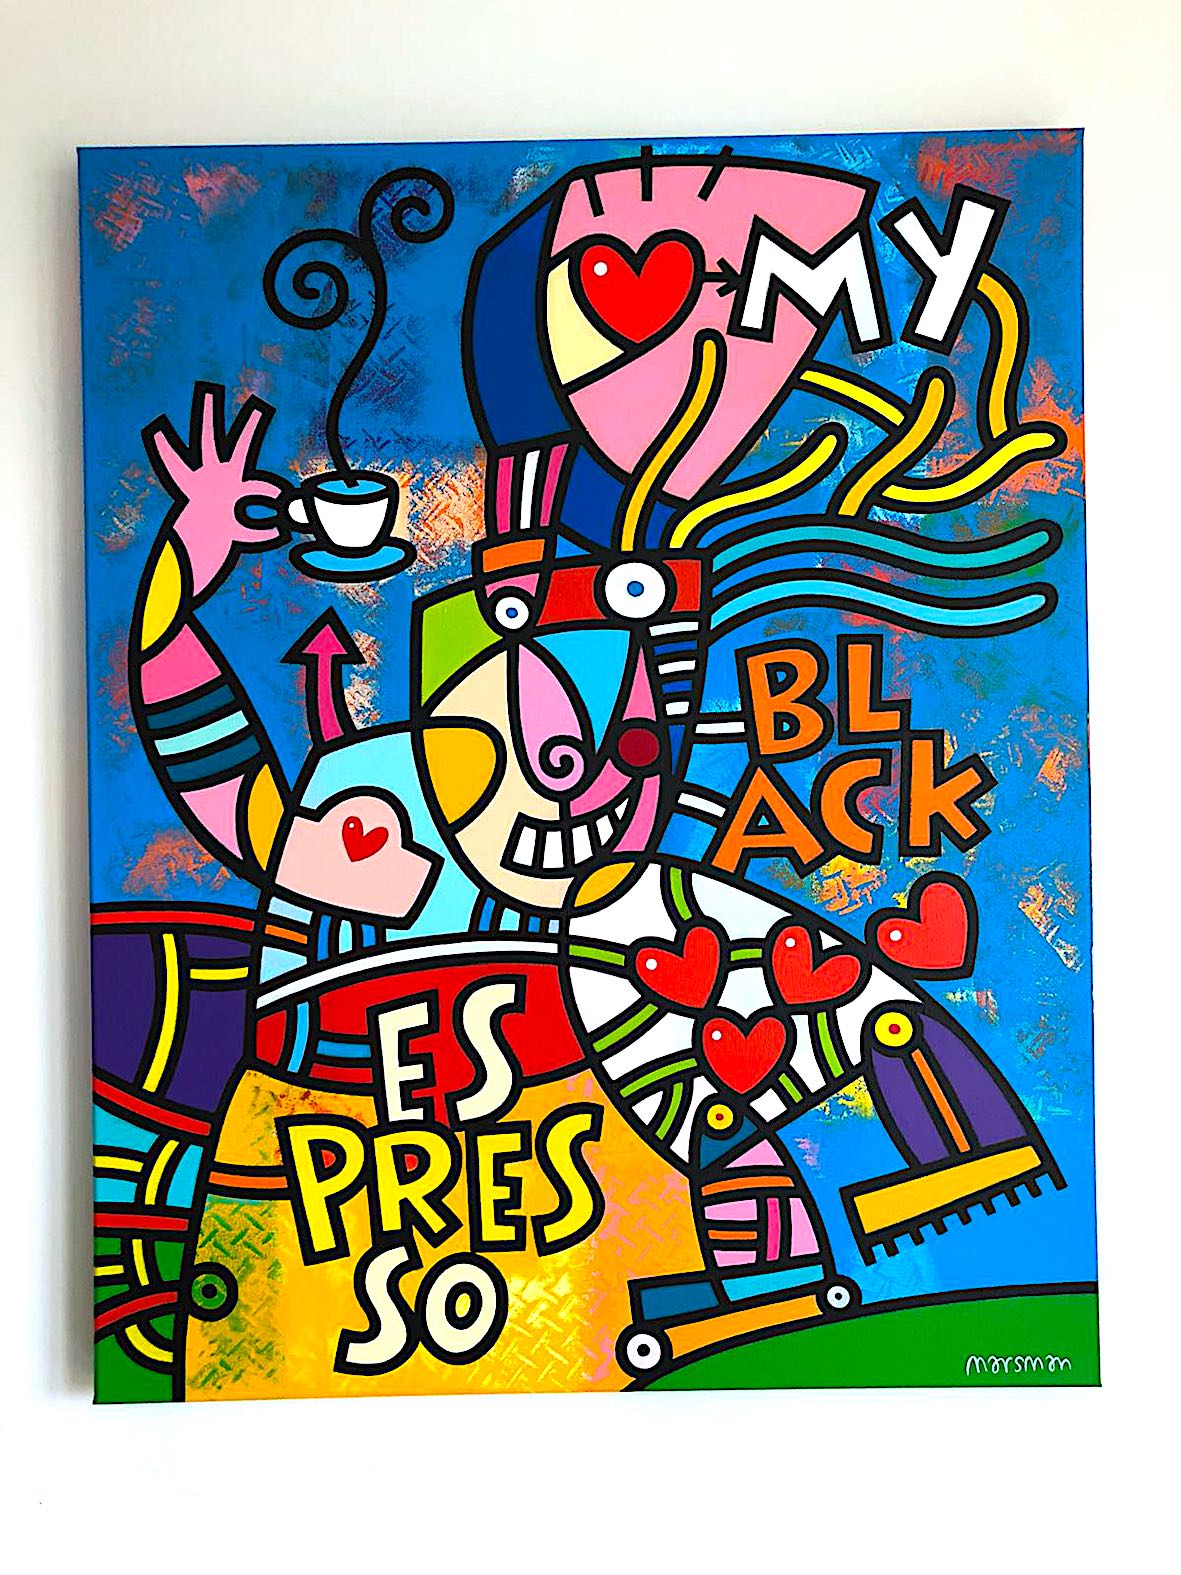 <b>BLACK ESPRESSO</b> - 100 x 80 x 4 cm - acrylic on canvas - SOLD  <a style="color: red; text-decoration: none" href="mailto:jpgpmarsman@onsbrabantnet.nl">BESTEL</a>